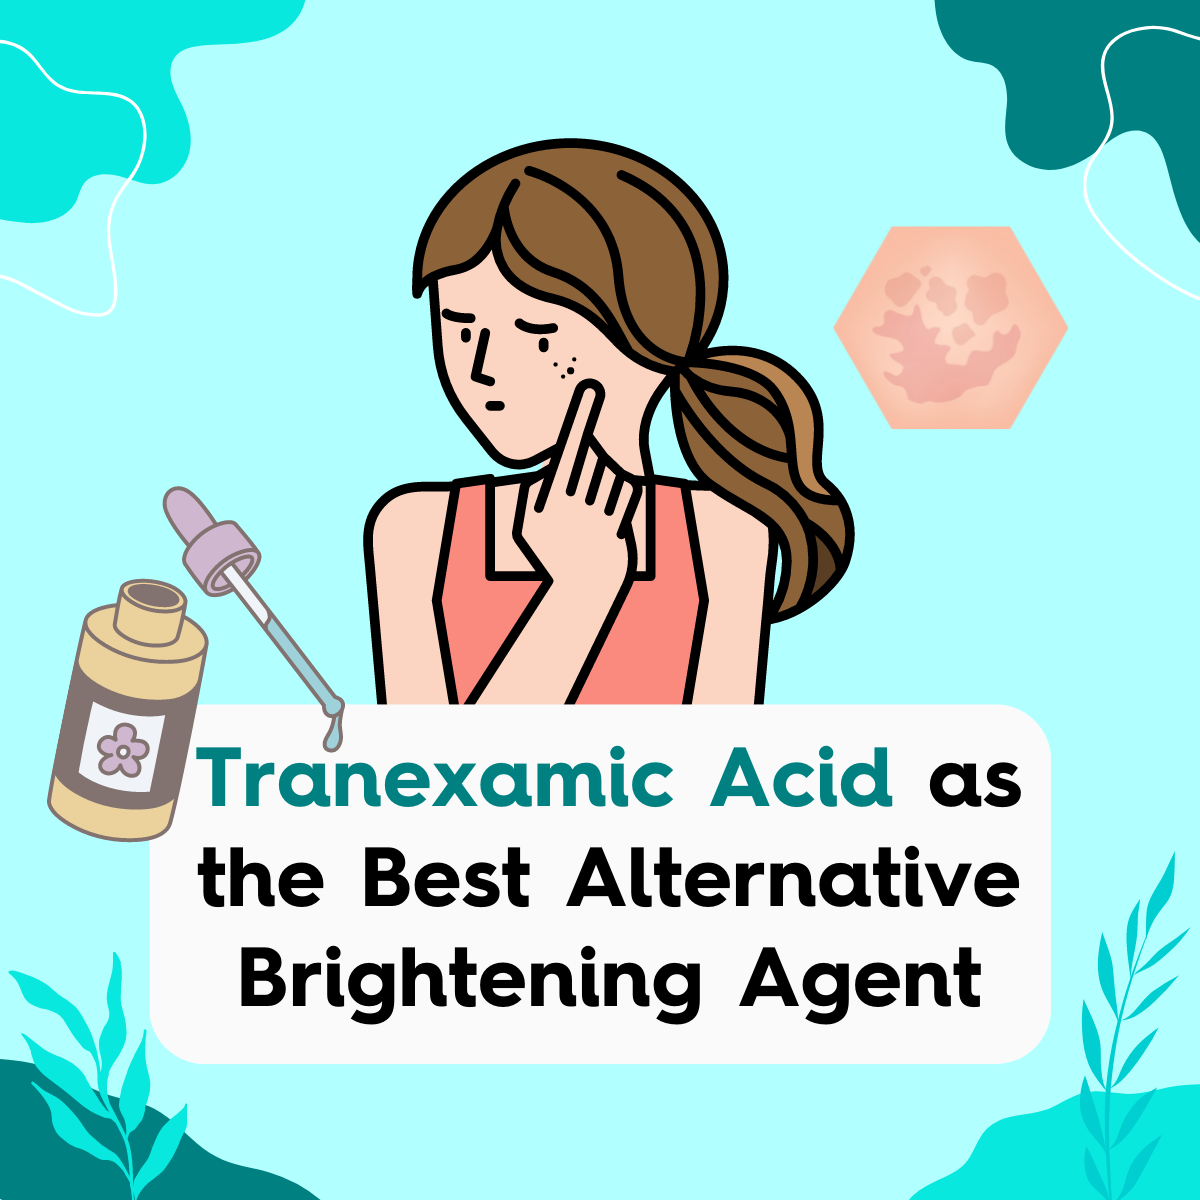 Tranexamic Acid is the Best Alternative Brightening Agent